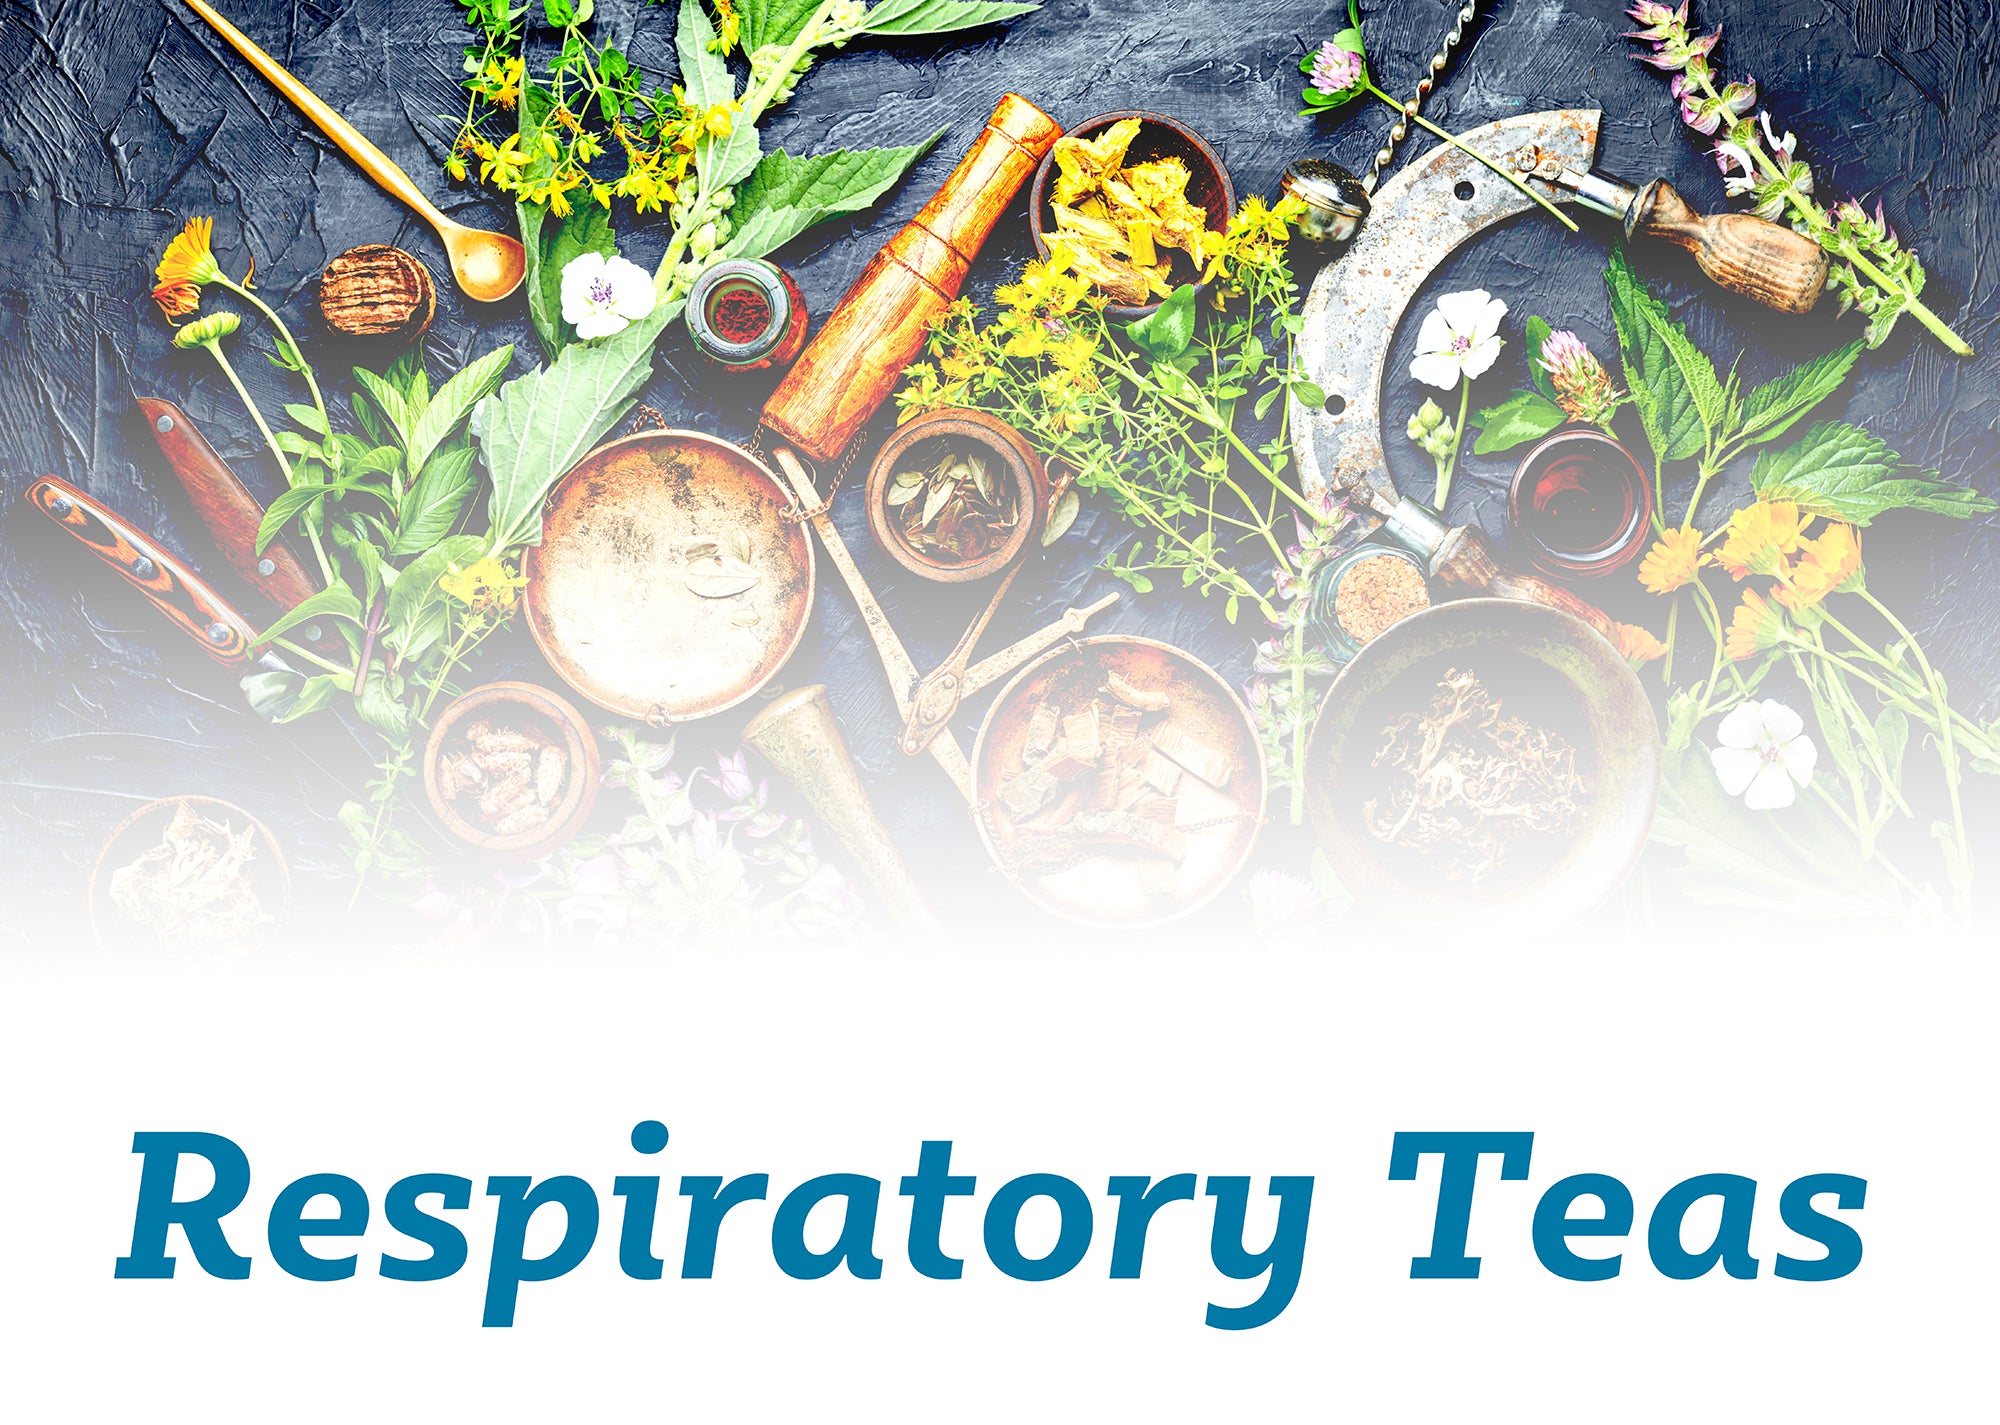 Respiratory Teas